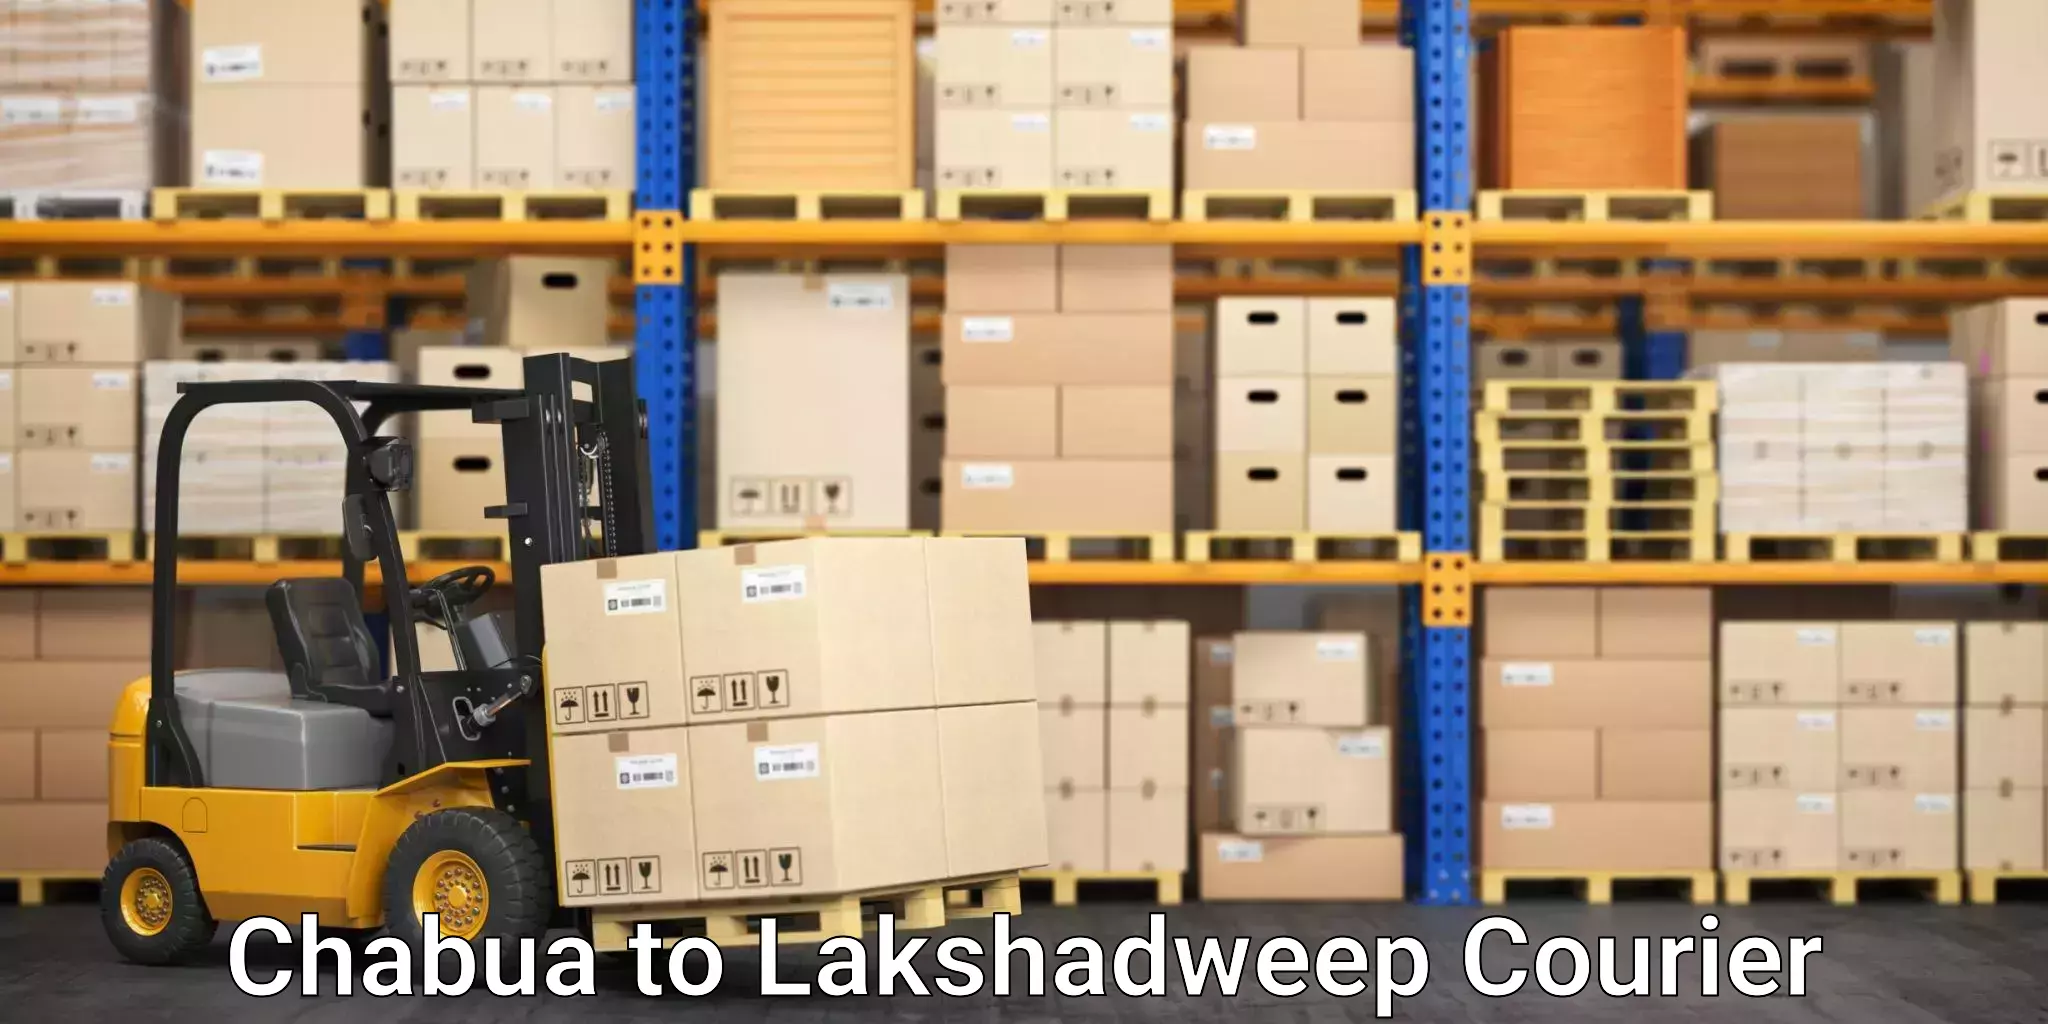 24/7 courier service Chabua to Lakshadweep